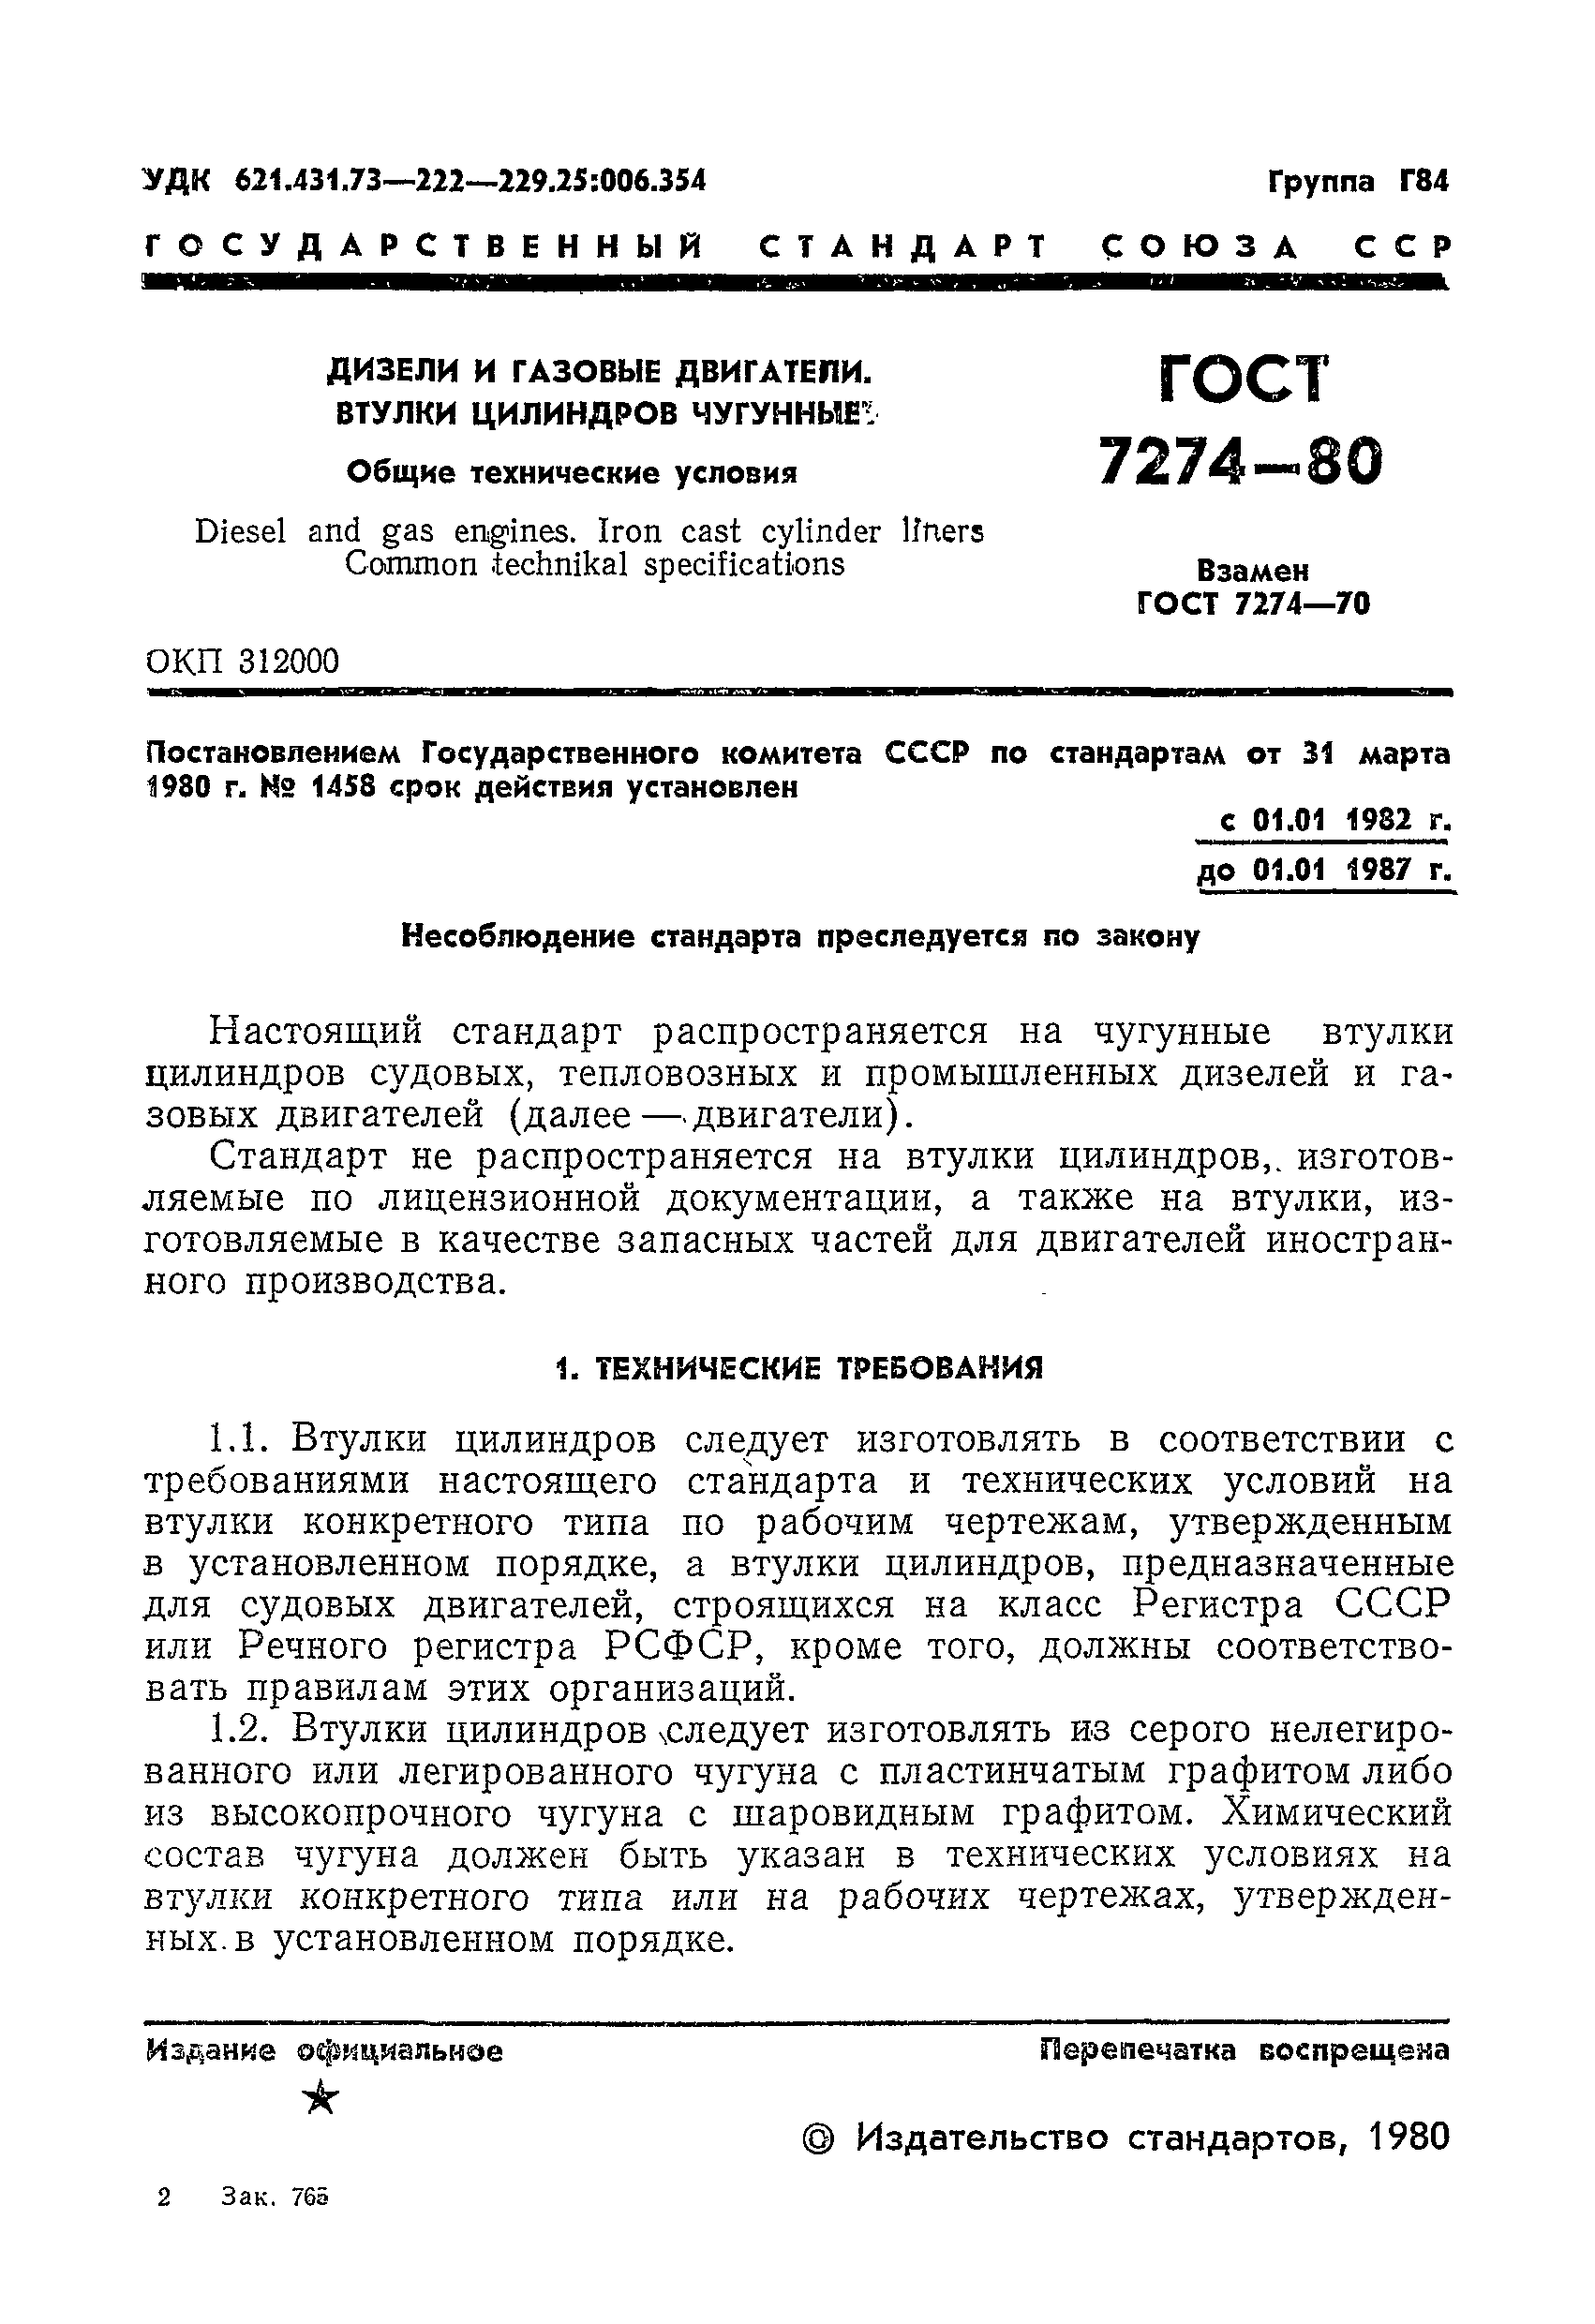 ГОСТ 7274-80